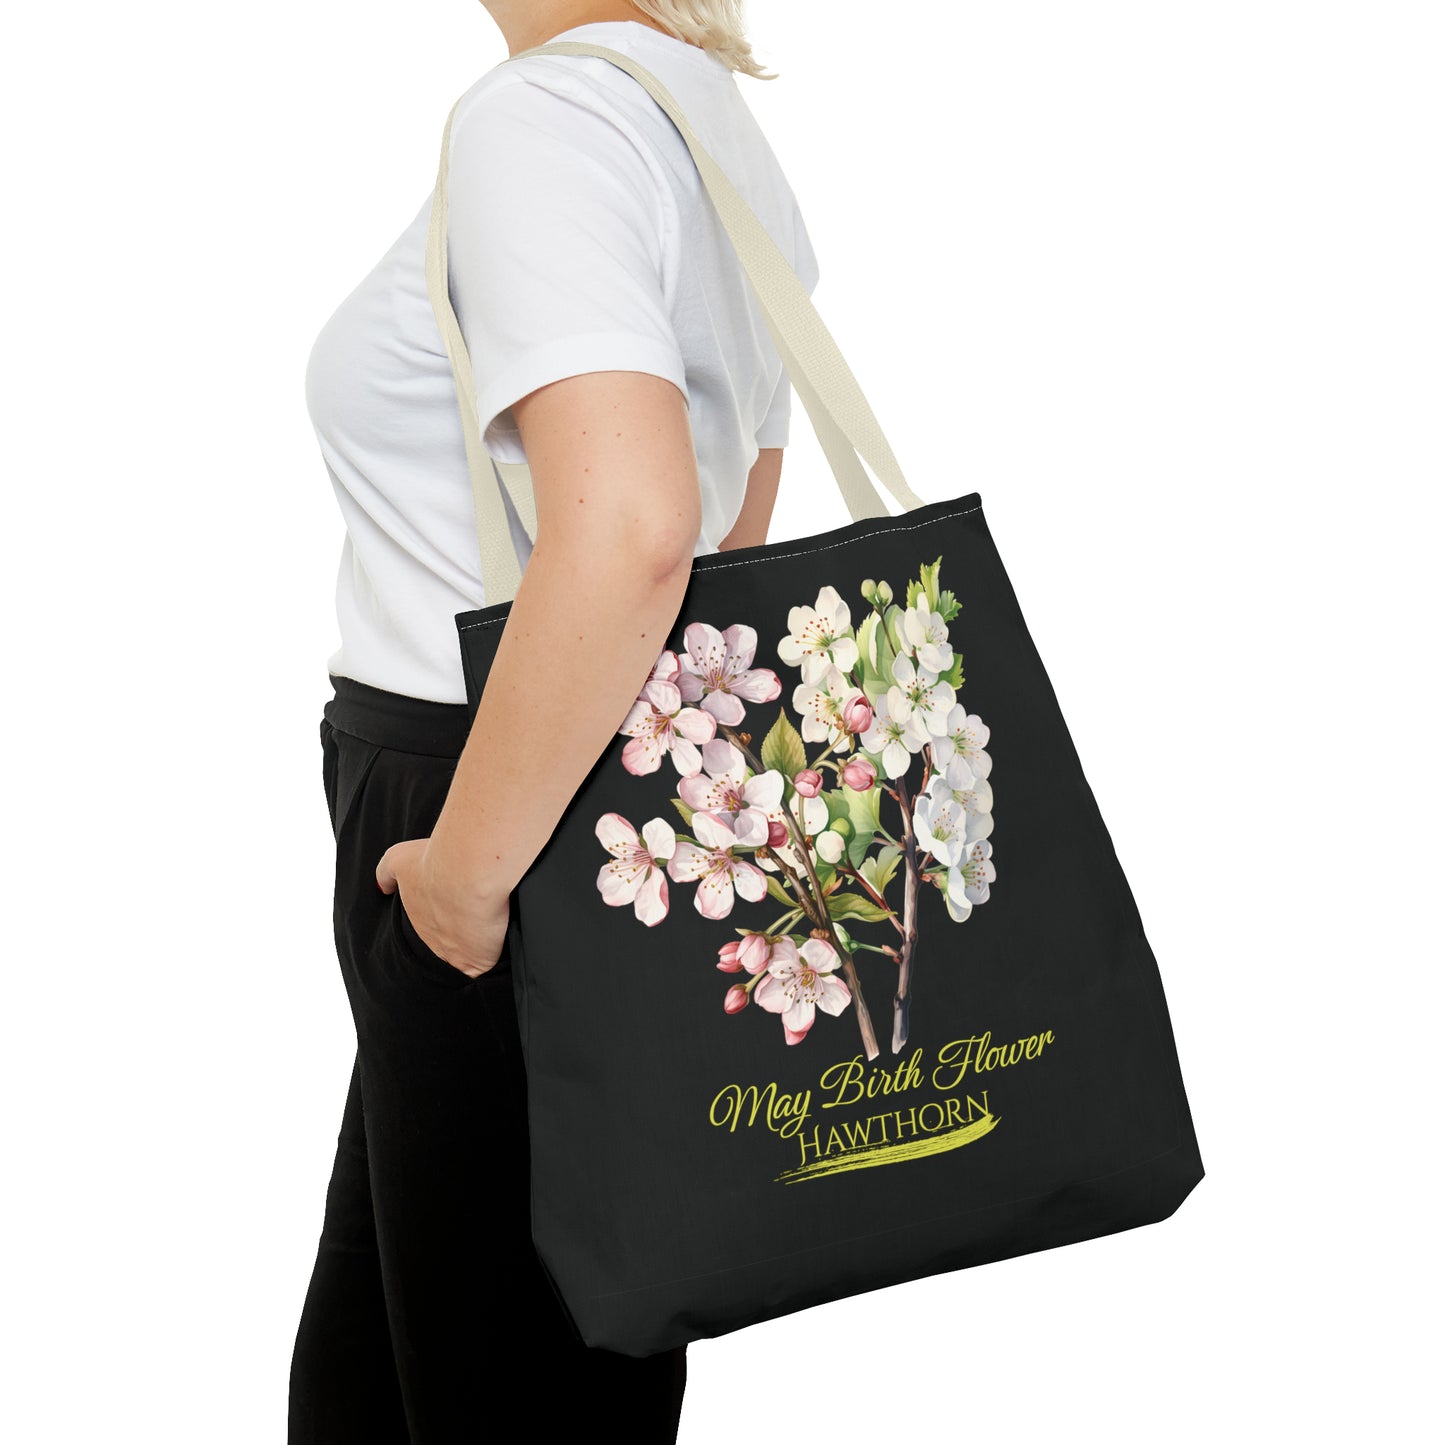 May Birth Flower: Hawthorn - Tote Bag (AOP)